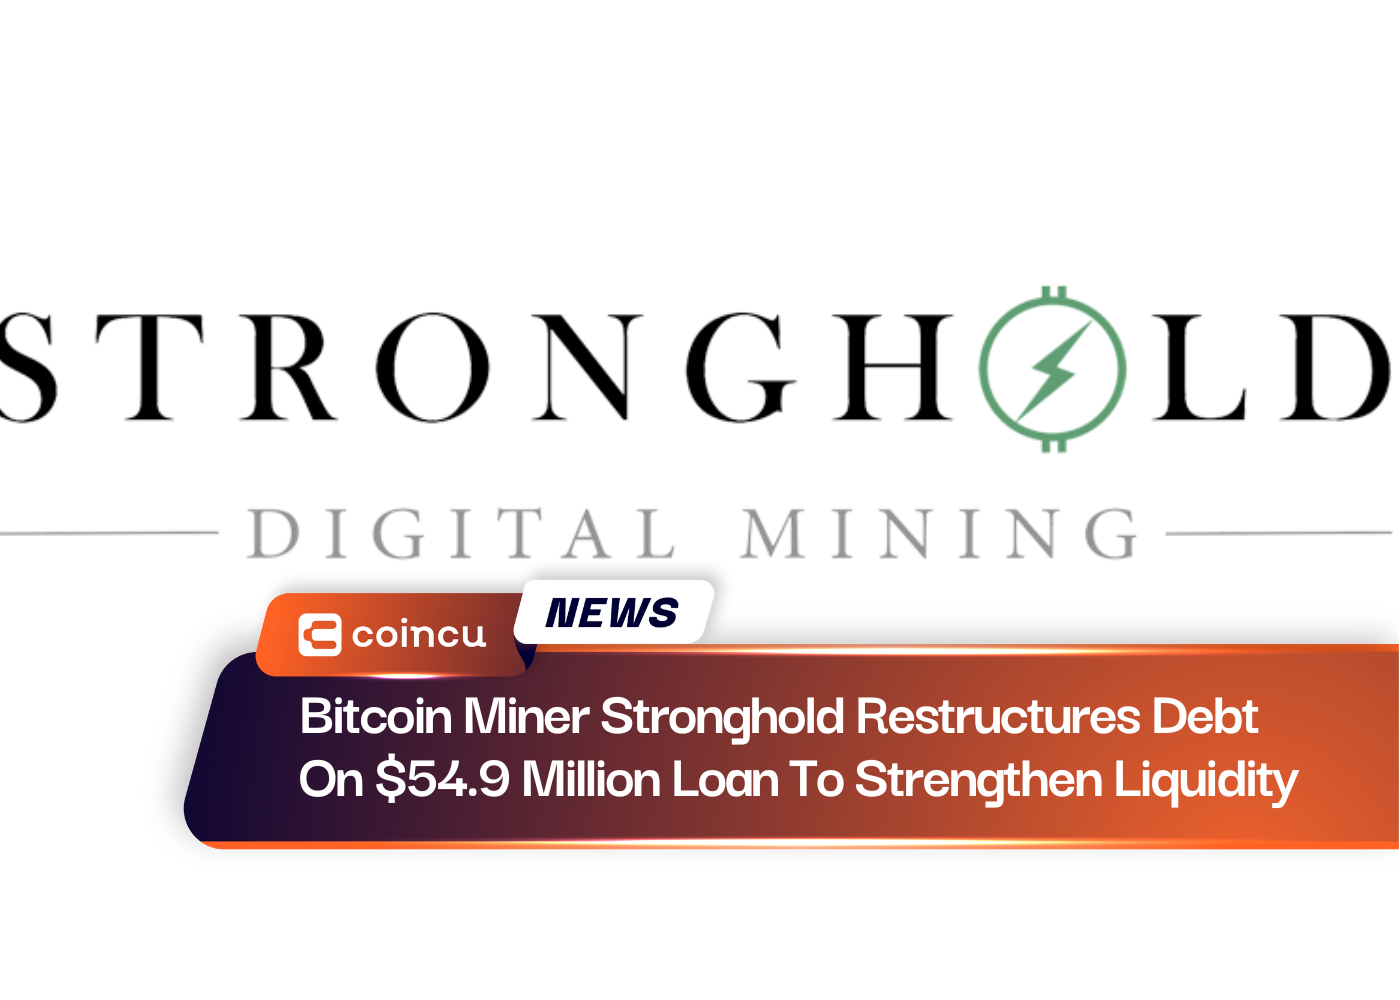 Fortaleza de minerador de Bitcoin reestrutura dívida de empréstimo de US$ 54.9 milhões para fortalecer liquidez